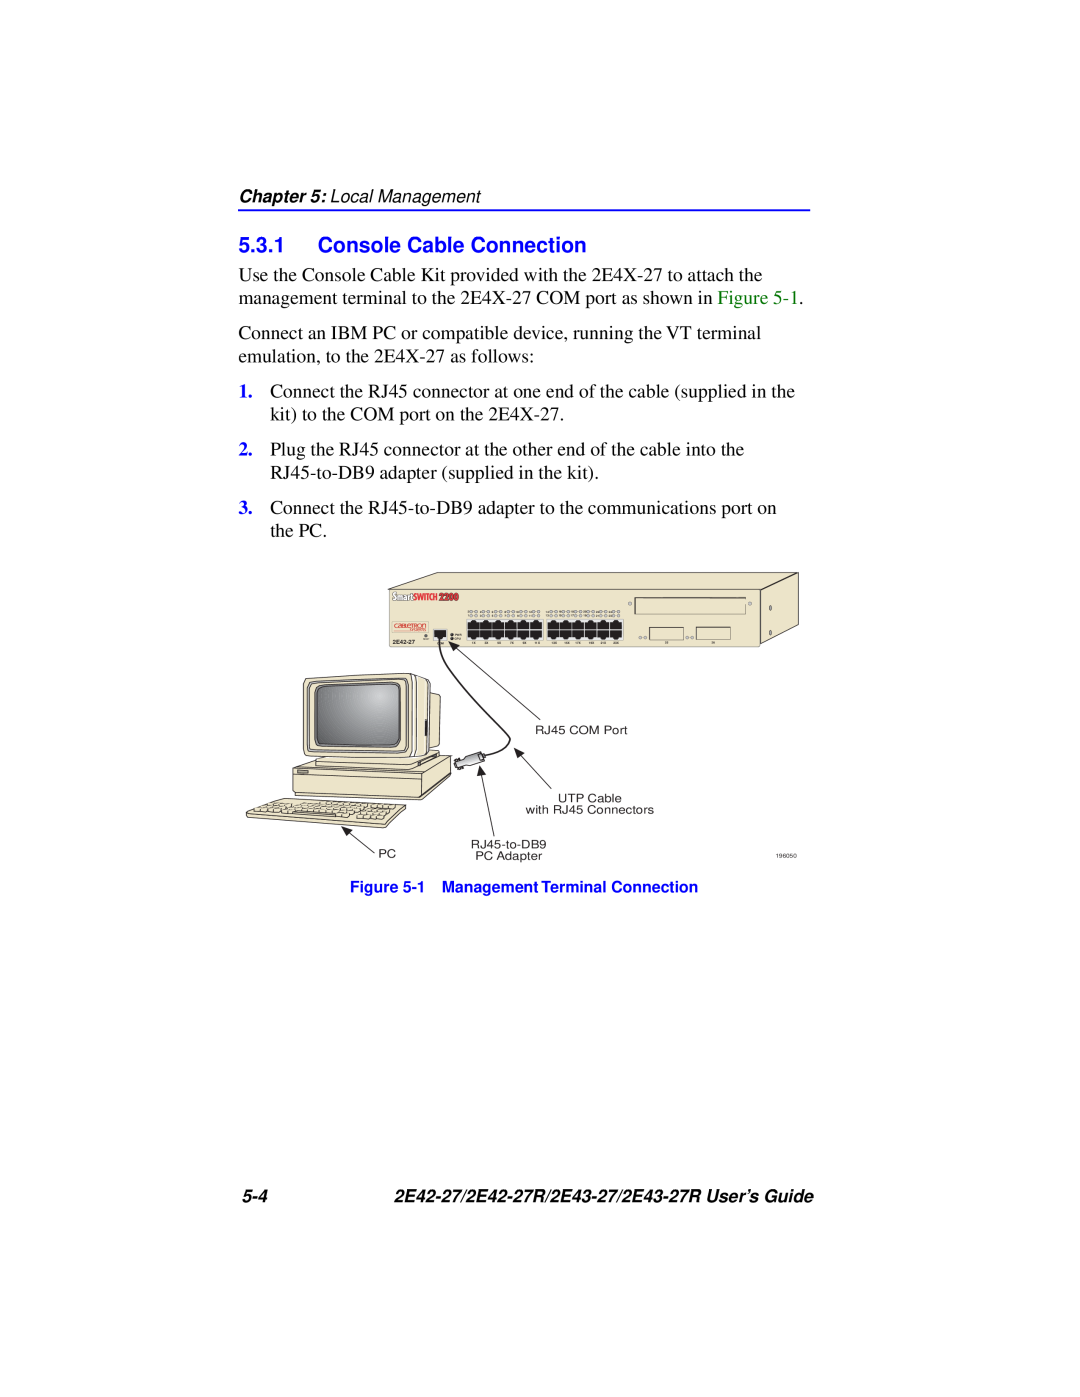 Cabletron Systems 2E43-27R, 2E42-27R manual Console Cable Connection, 1 Management Terminal Connection 